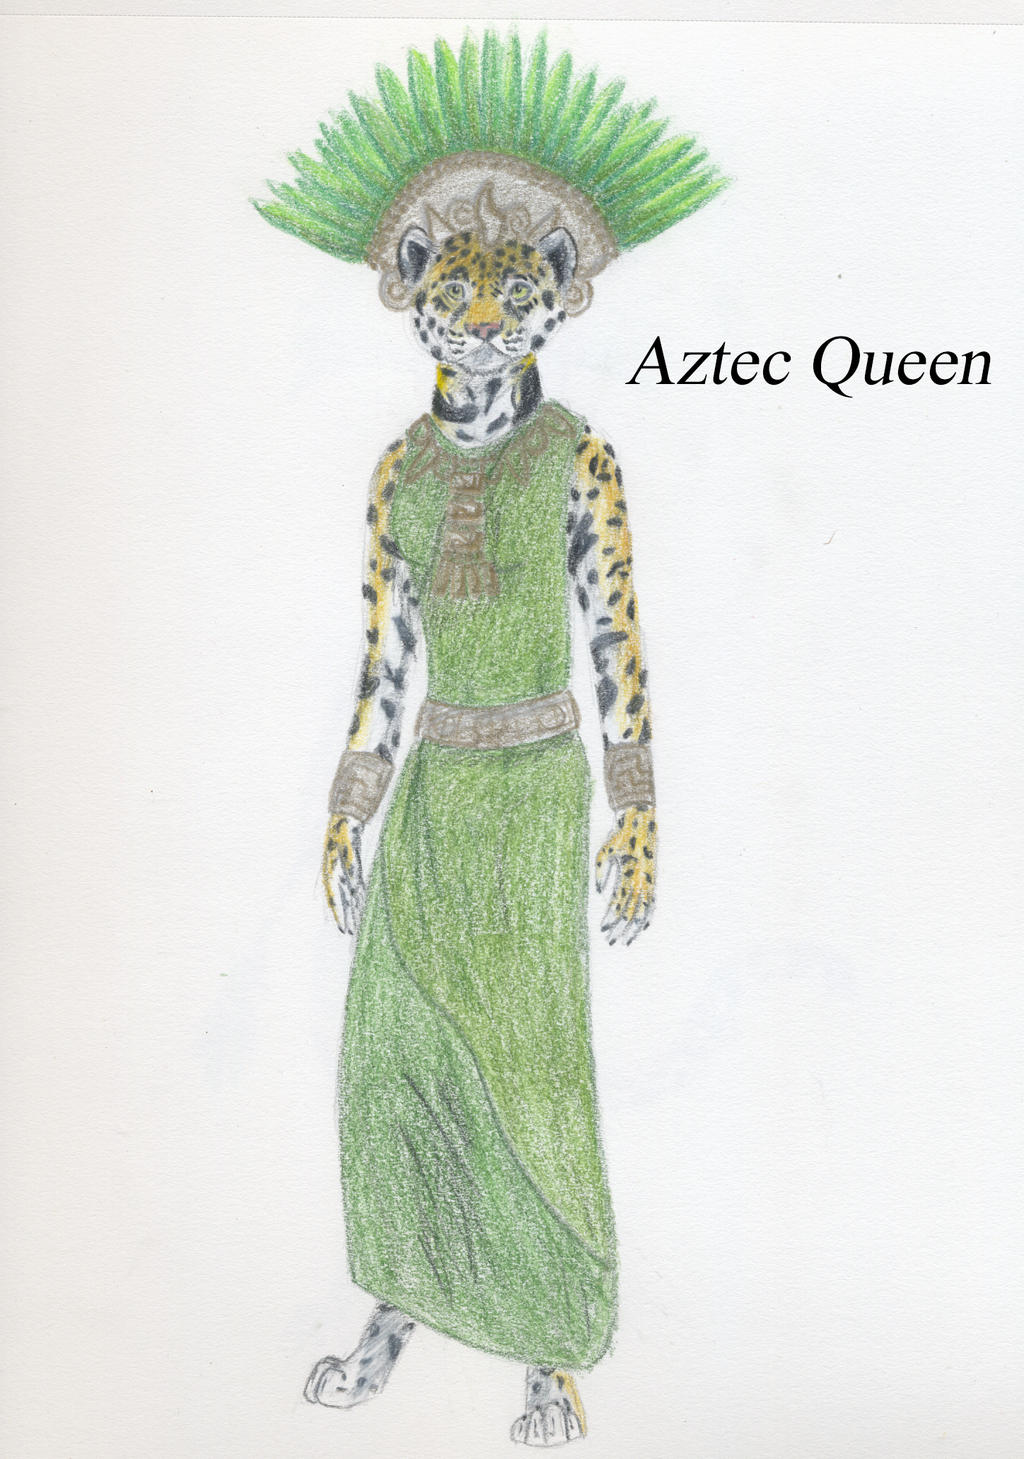 Aztec Queen by MegaRide on deviantART